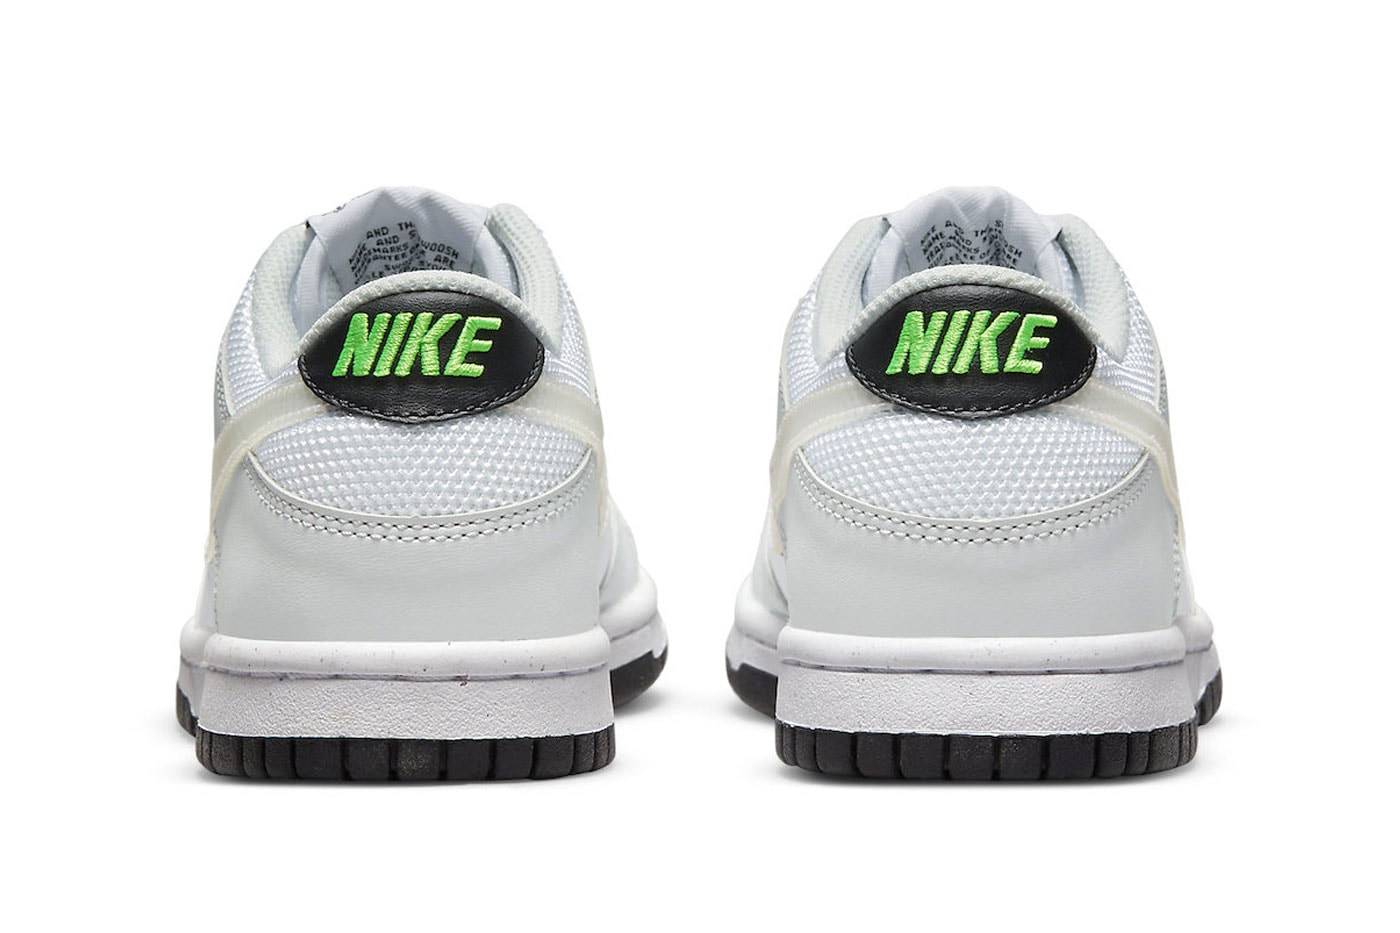 Nike Dunk Low Glitch Swoosh dv3033-001 move to zero gray white neon green clear mesh leather release info news